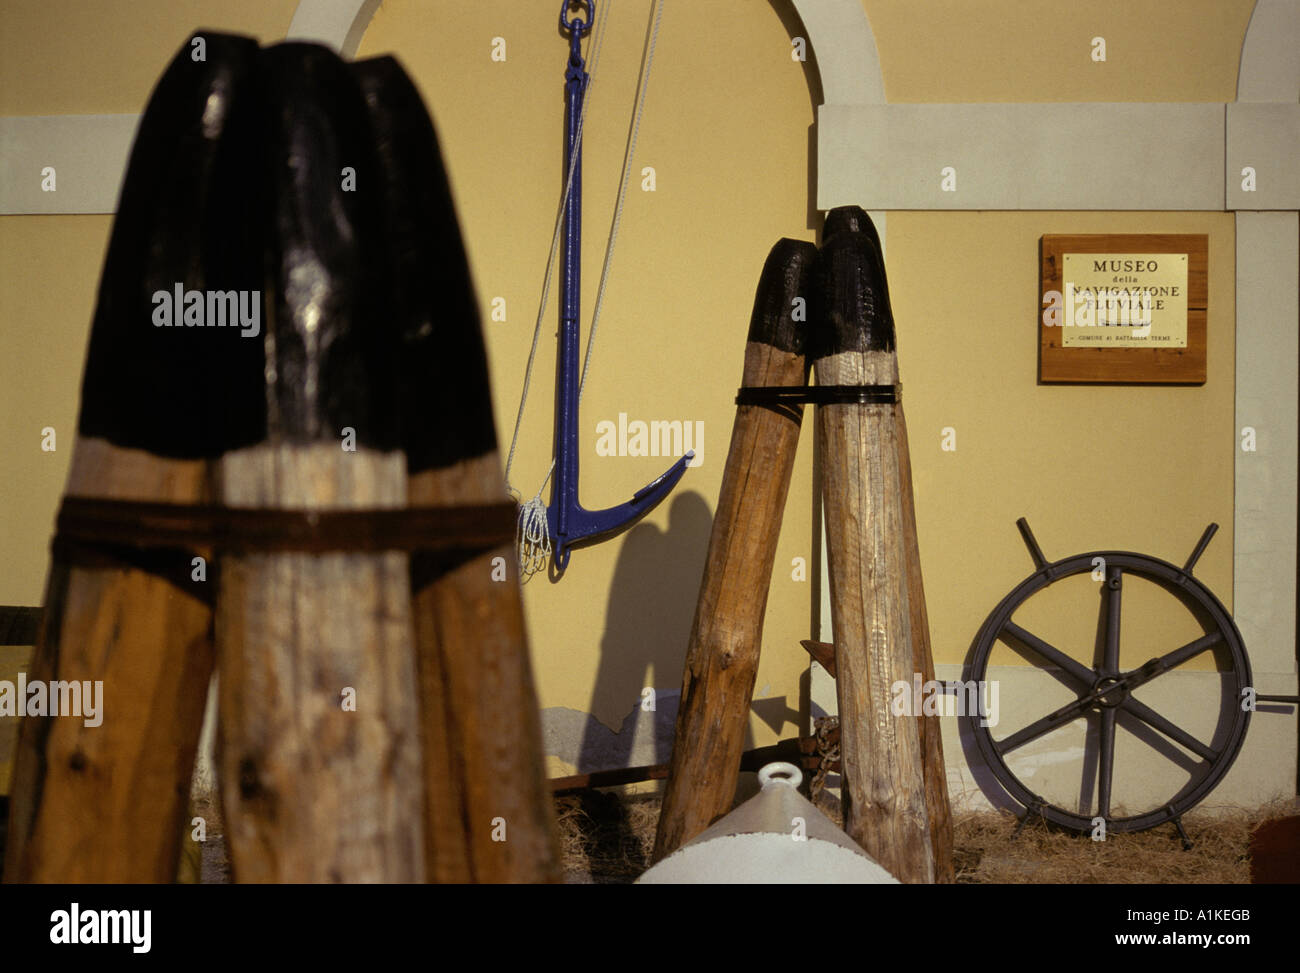 Museo de navegación fluvial, Battaglia Terme, Veneto, Italia Foto de stock